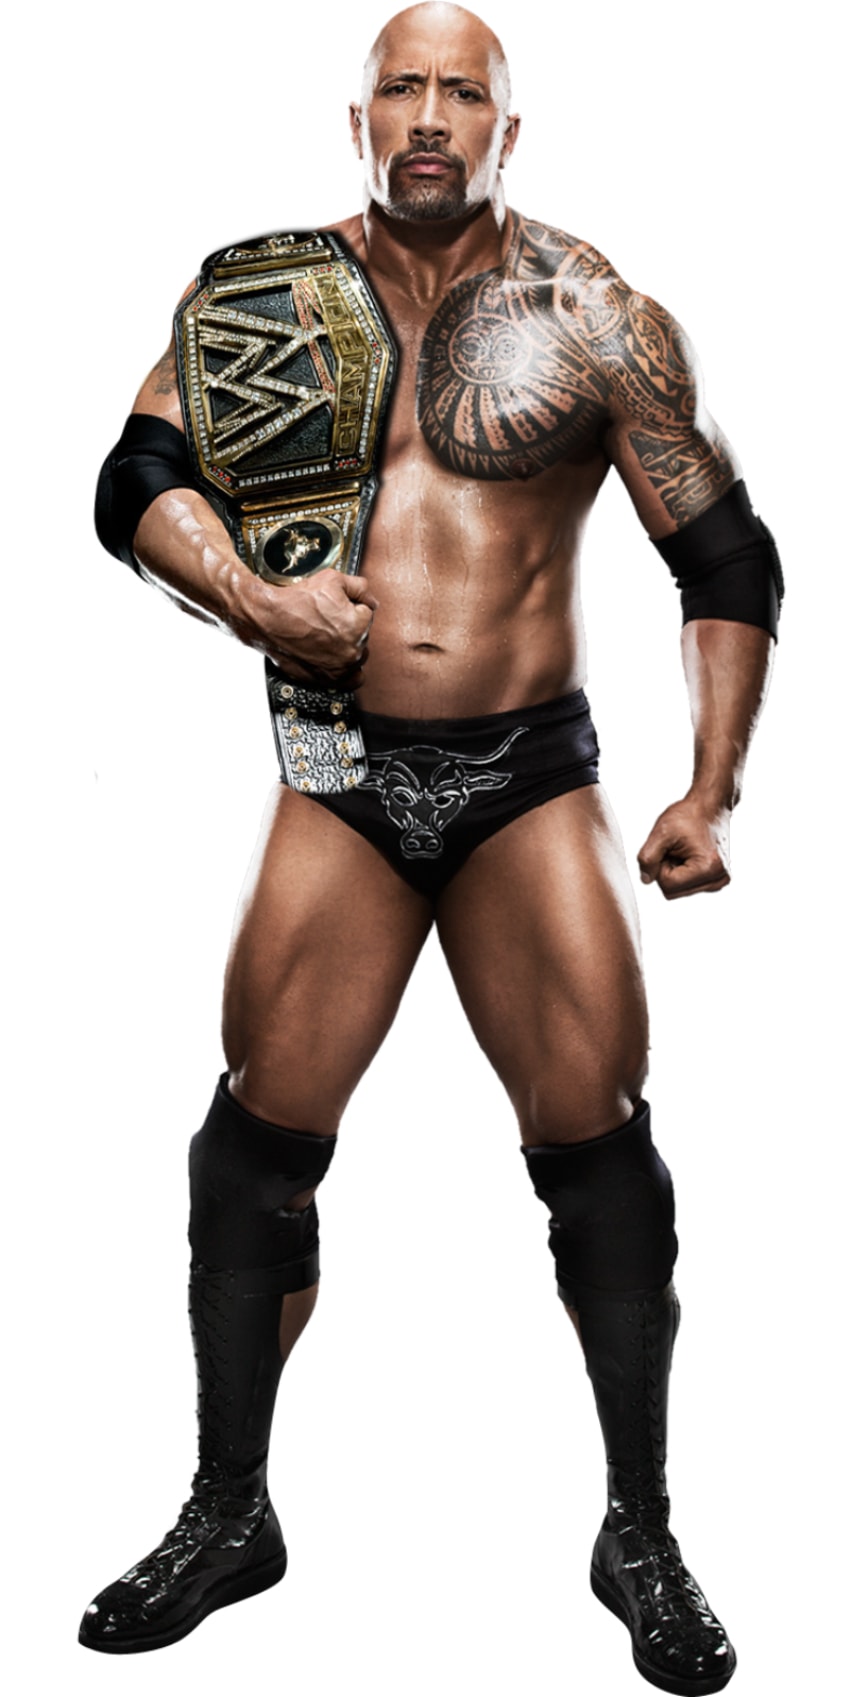 Dwayne Johnson The Rock the champion wrestler holding a belt